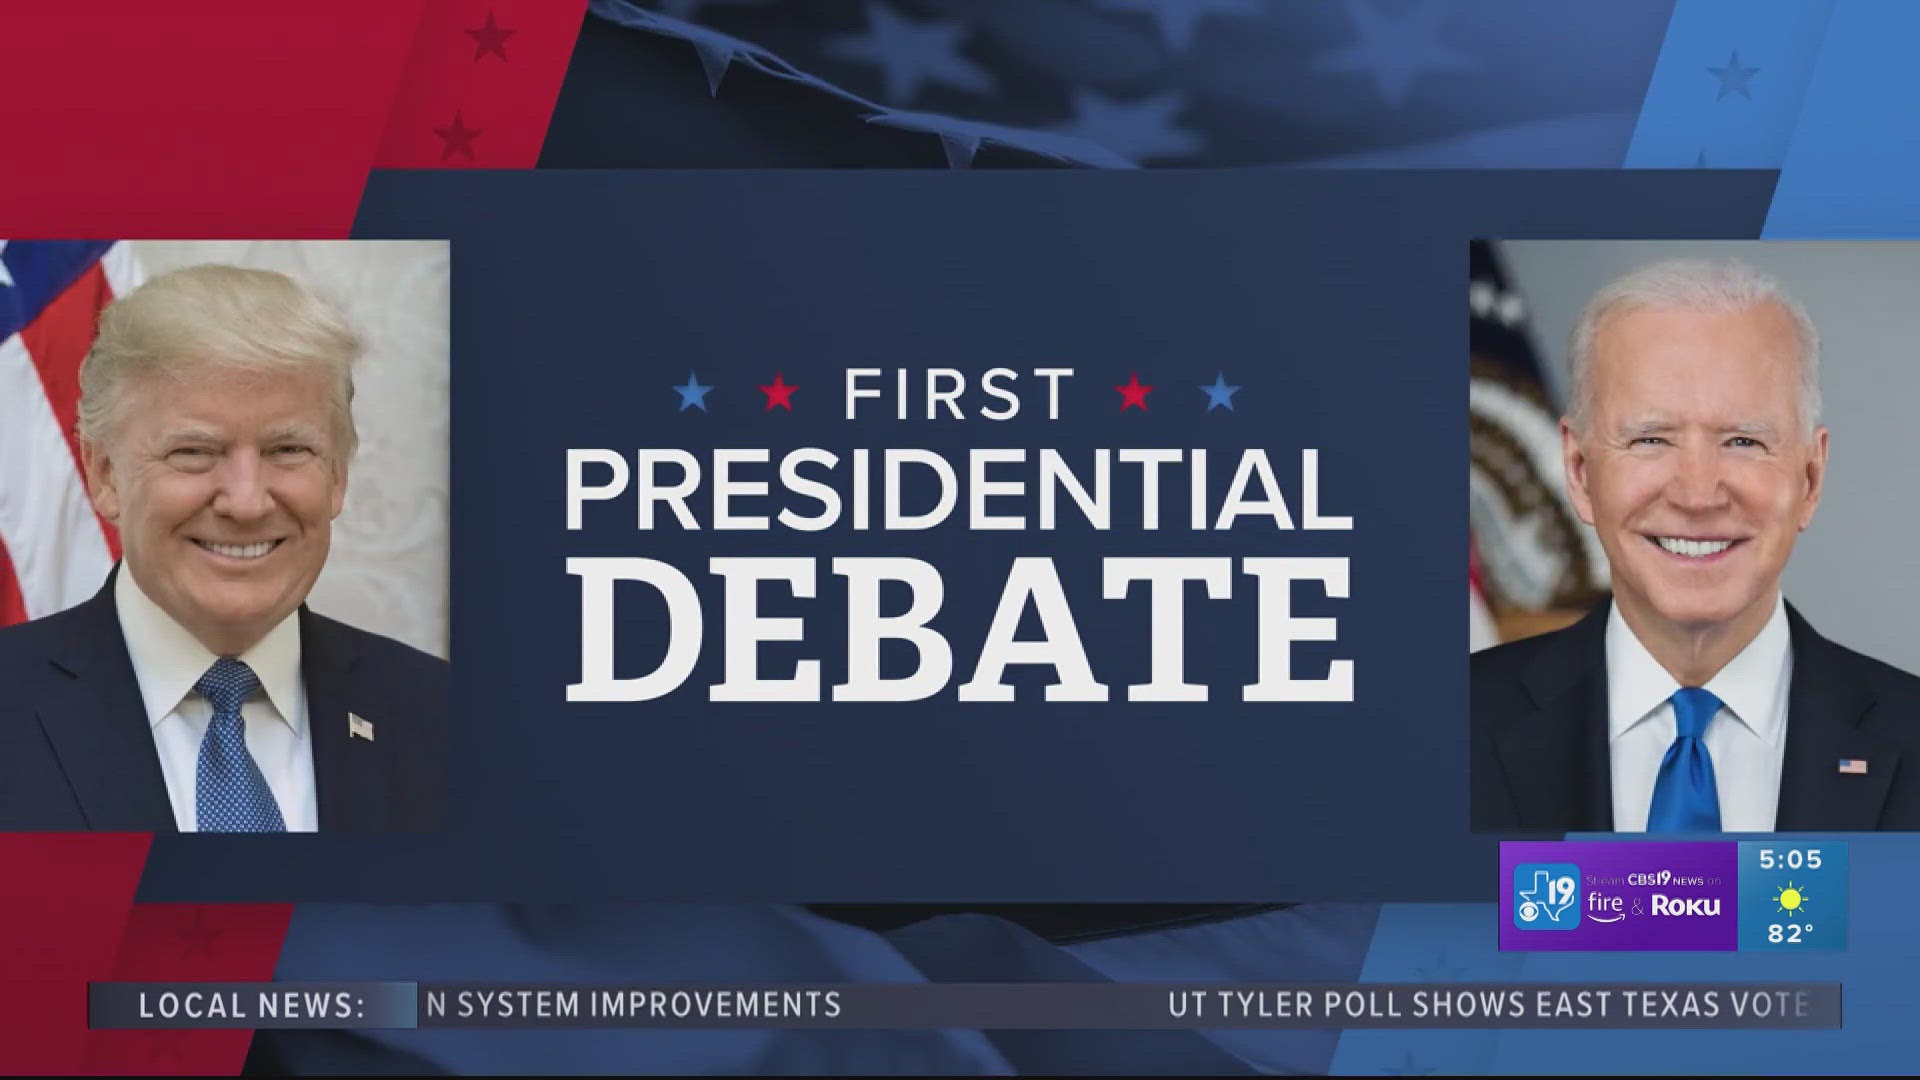 UT Tyler poll shows East Texas voters' opinions ahead of 2024 presidential debate